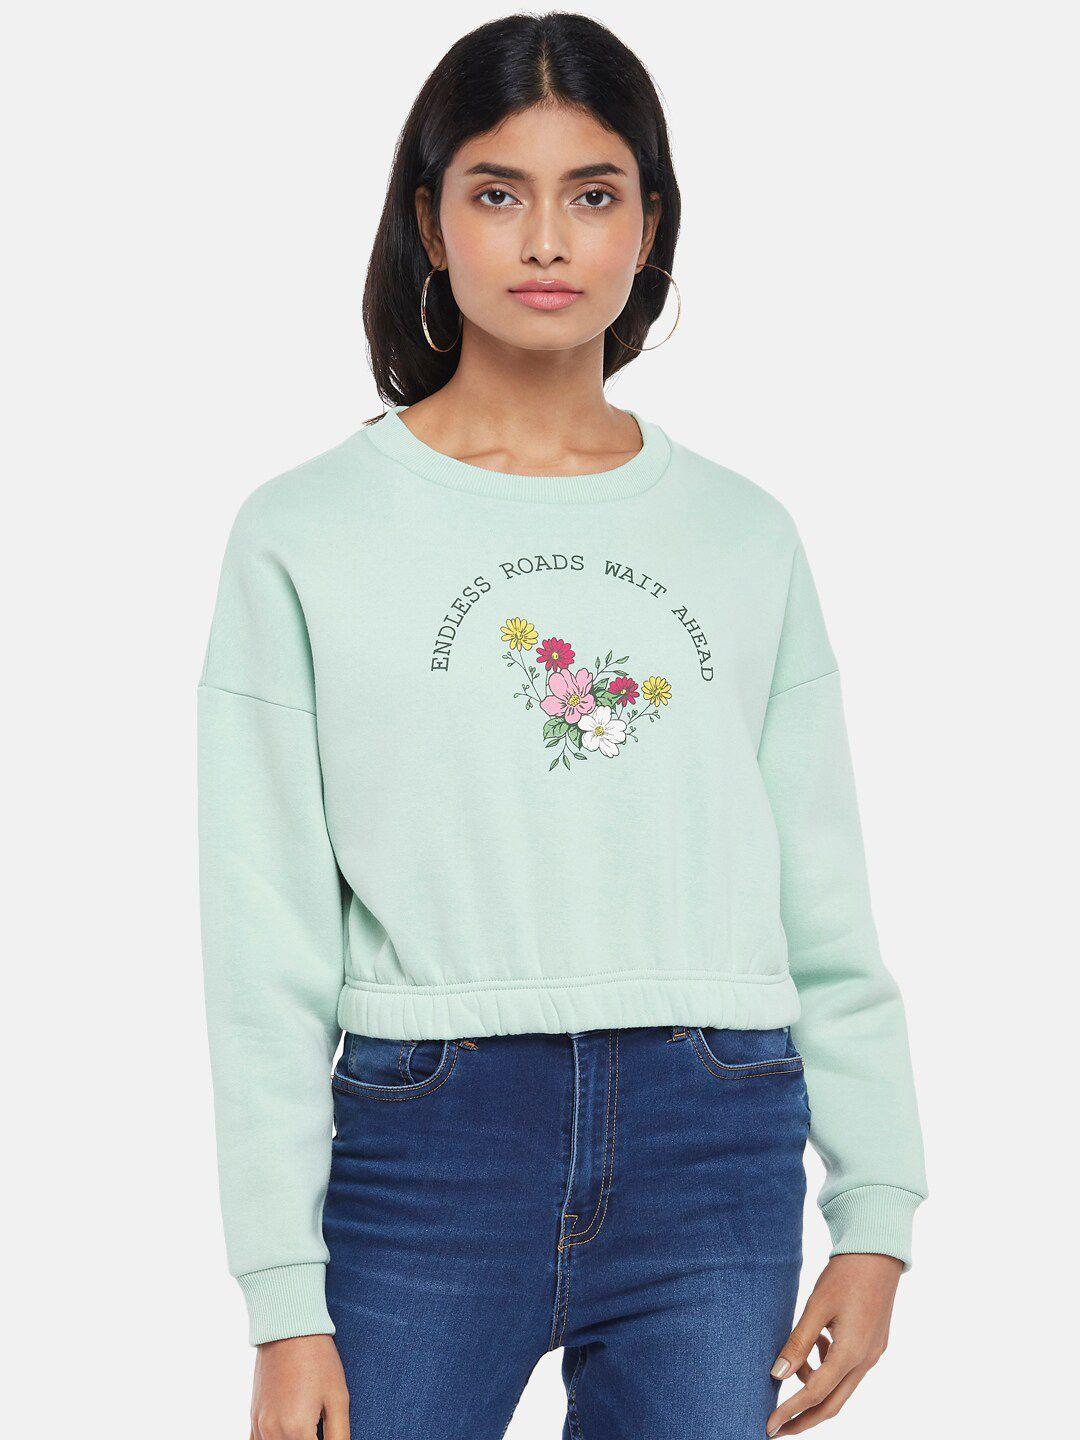 honey by pantaloons women printed sweatshirt